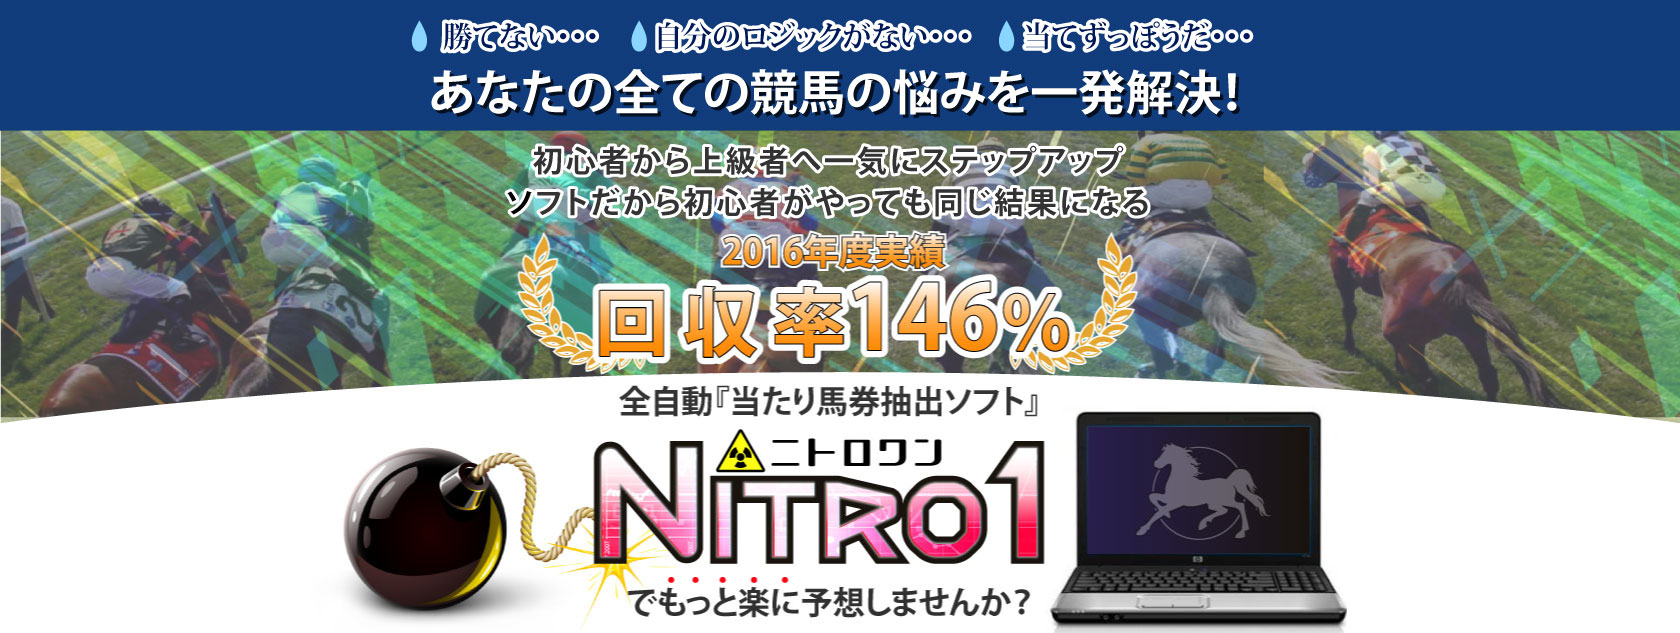 【ＰＲ】春のＧ1で絶好調の競馬予想ソフト「Nitro 1」